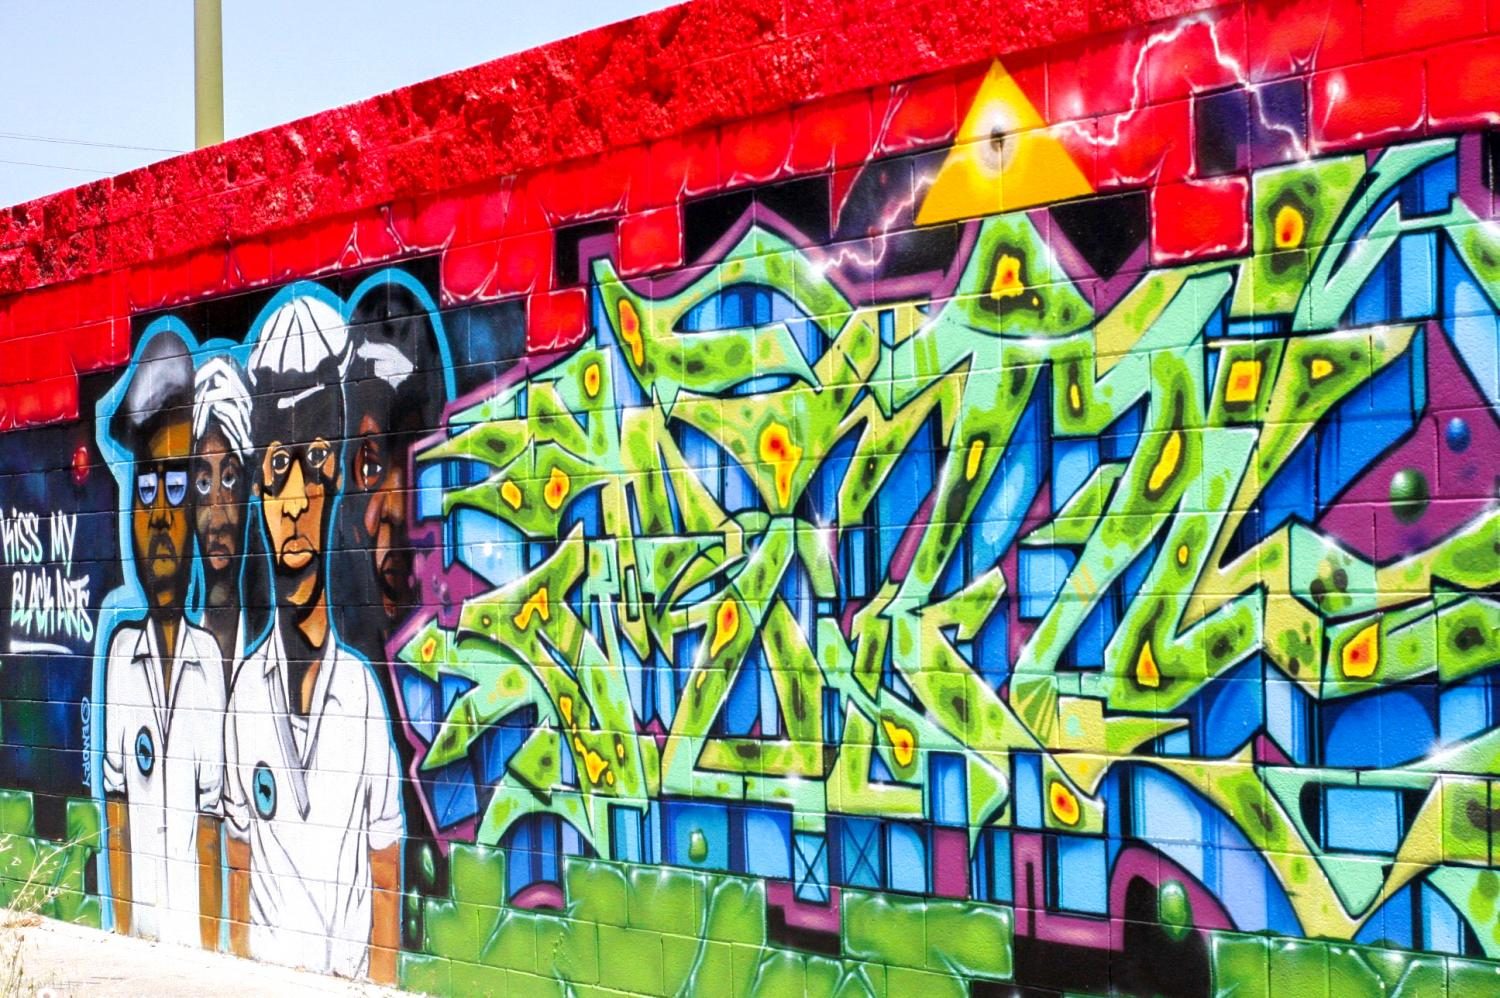 Oakland+and+graffiti+art+go+hand+in+hand